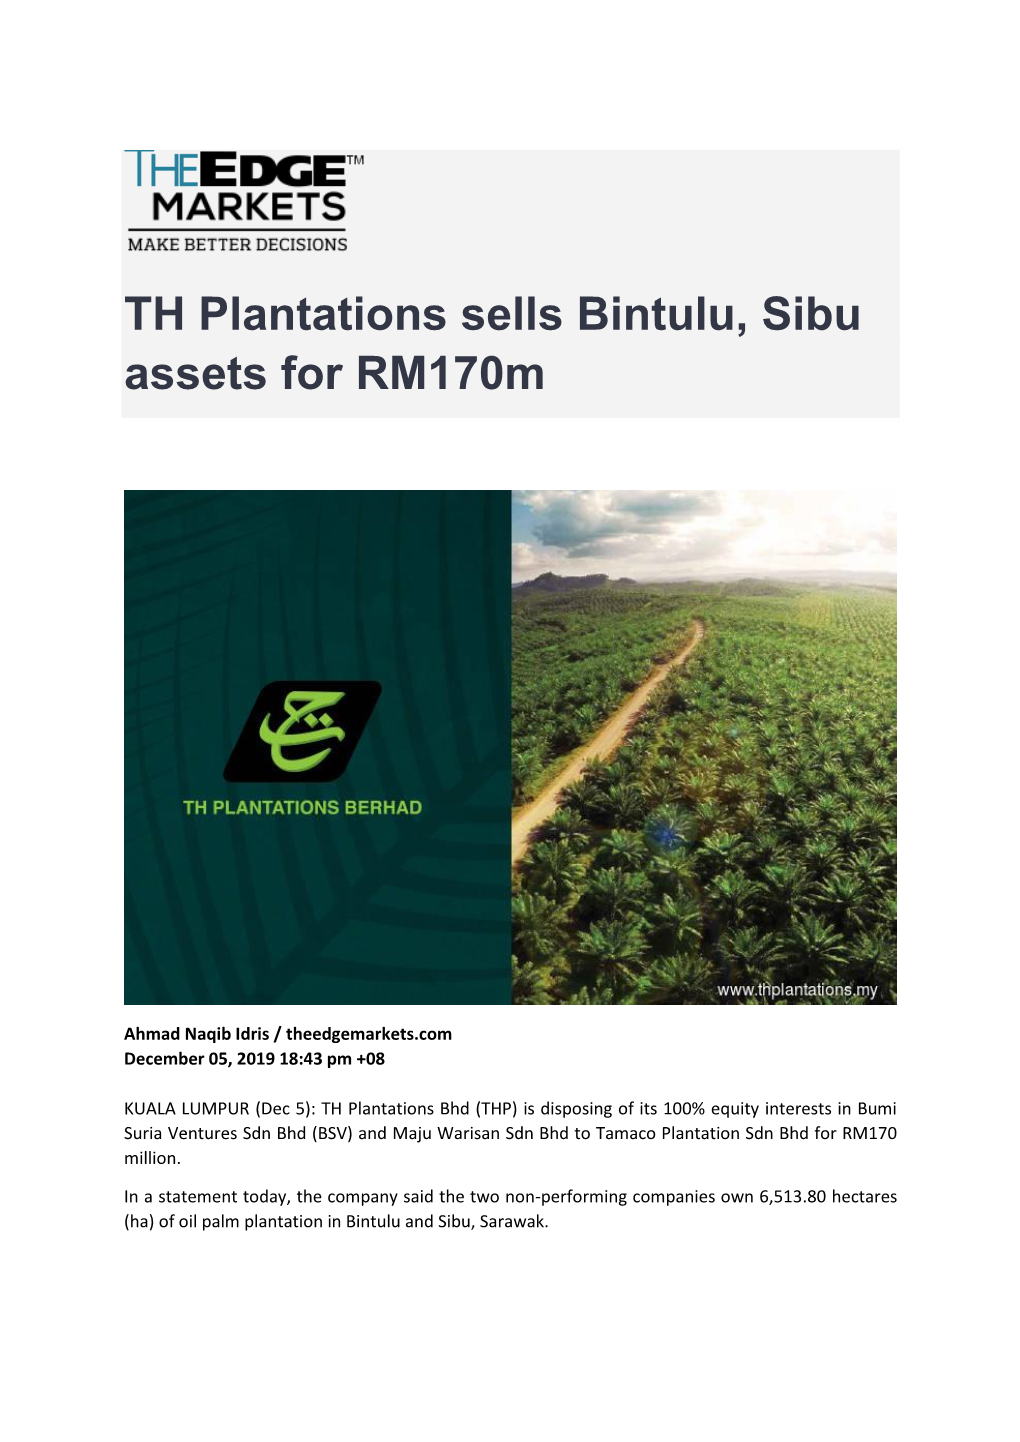 TH Plantations Sells Bintulu, Sibu Assets for Rm170m